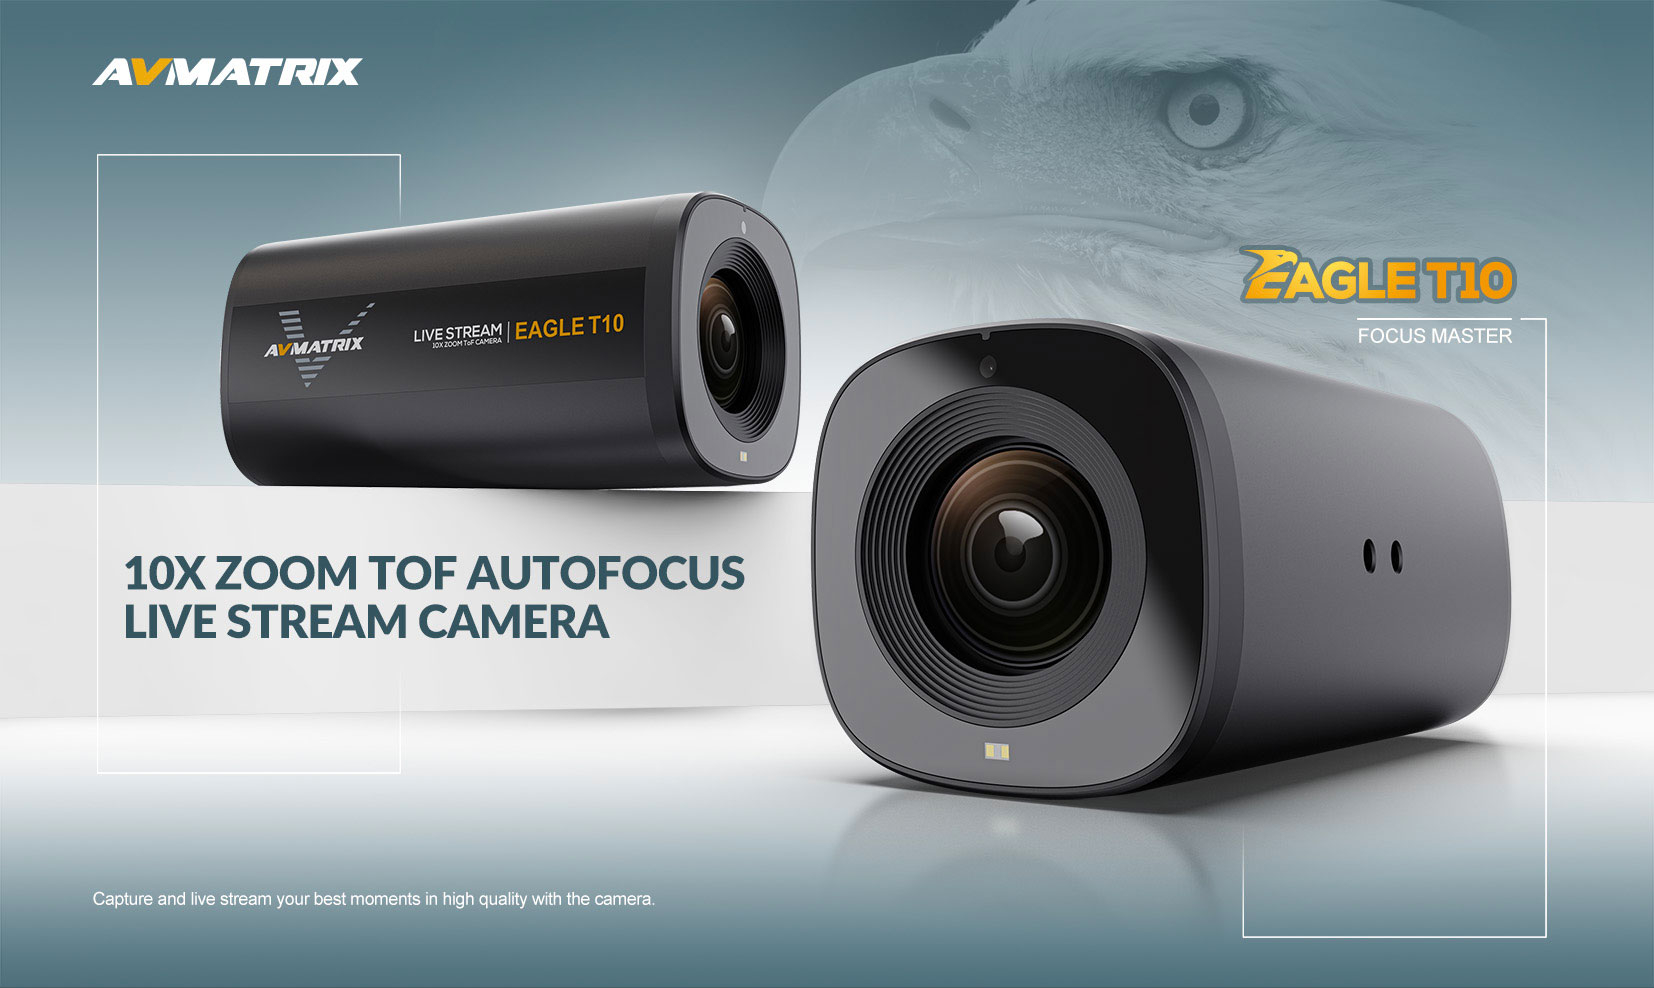 10X Zoom TOF Autofocus Live Stream Camera